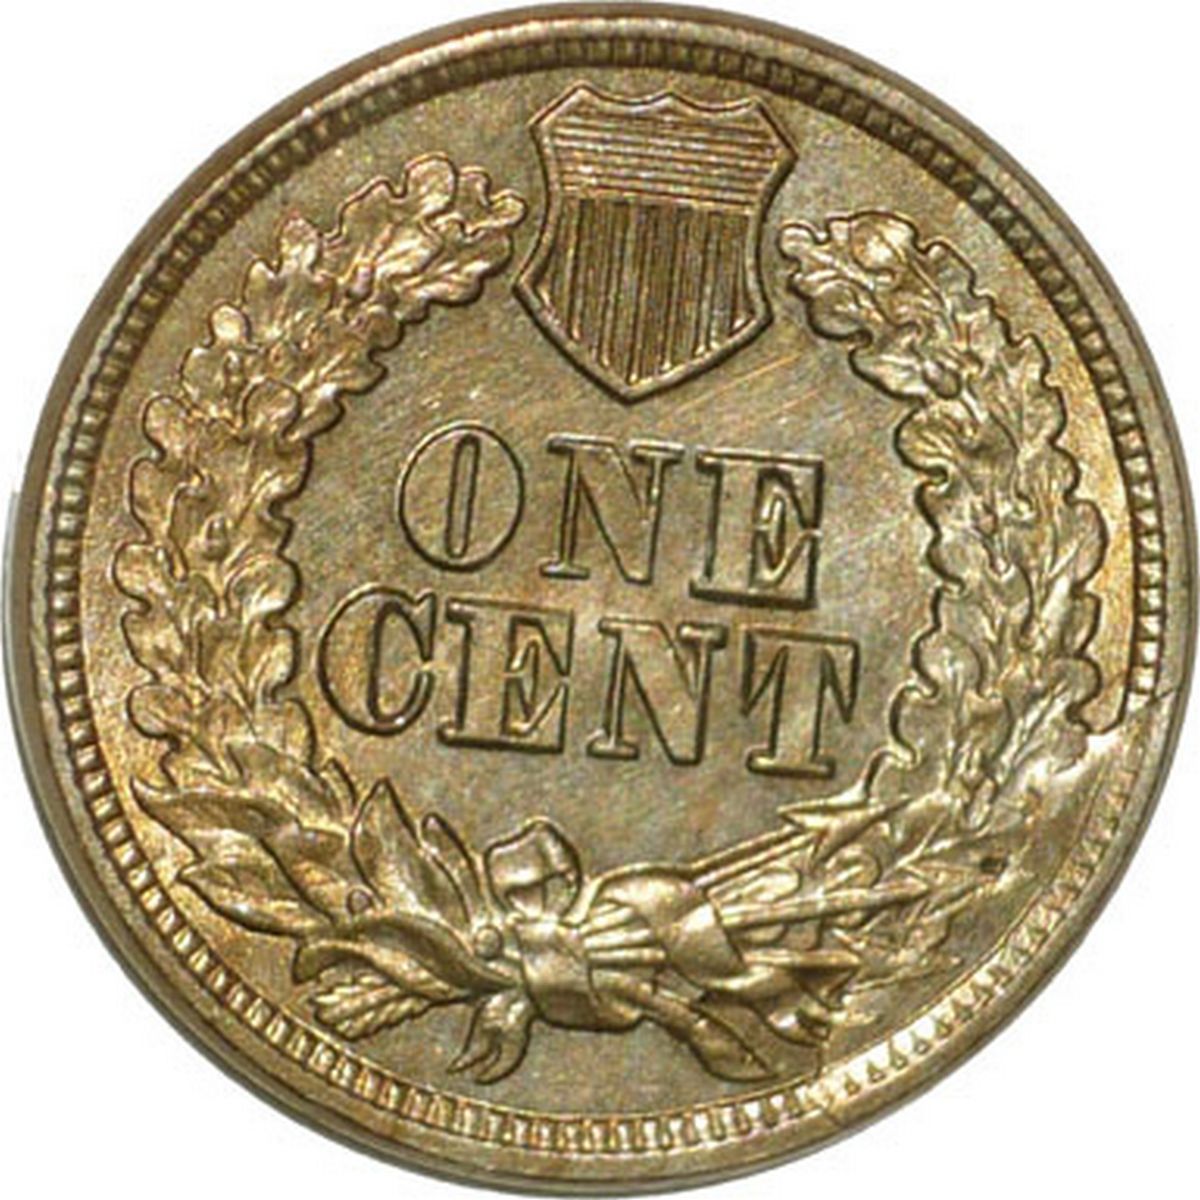 1864 CN CUD-004 - Indian Head Penny - Photo by David Poliquin